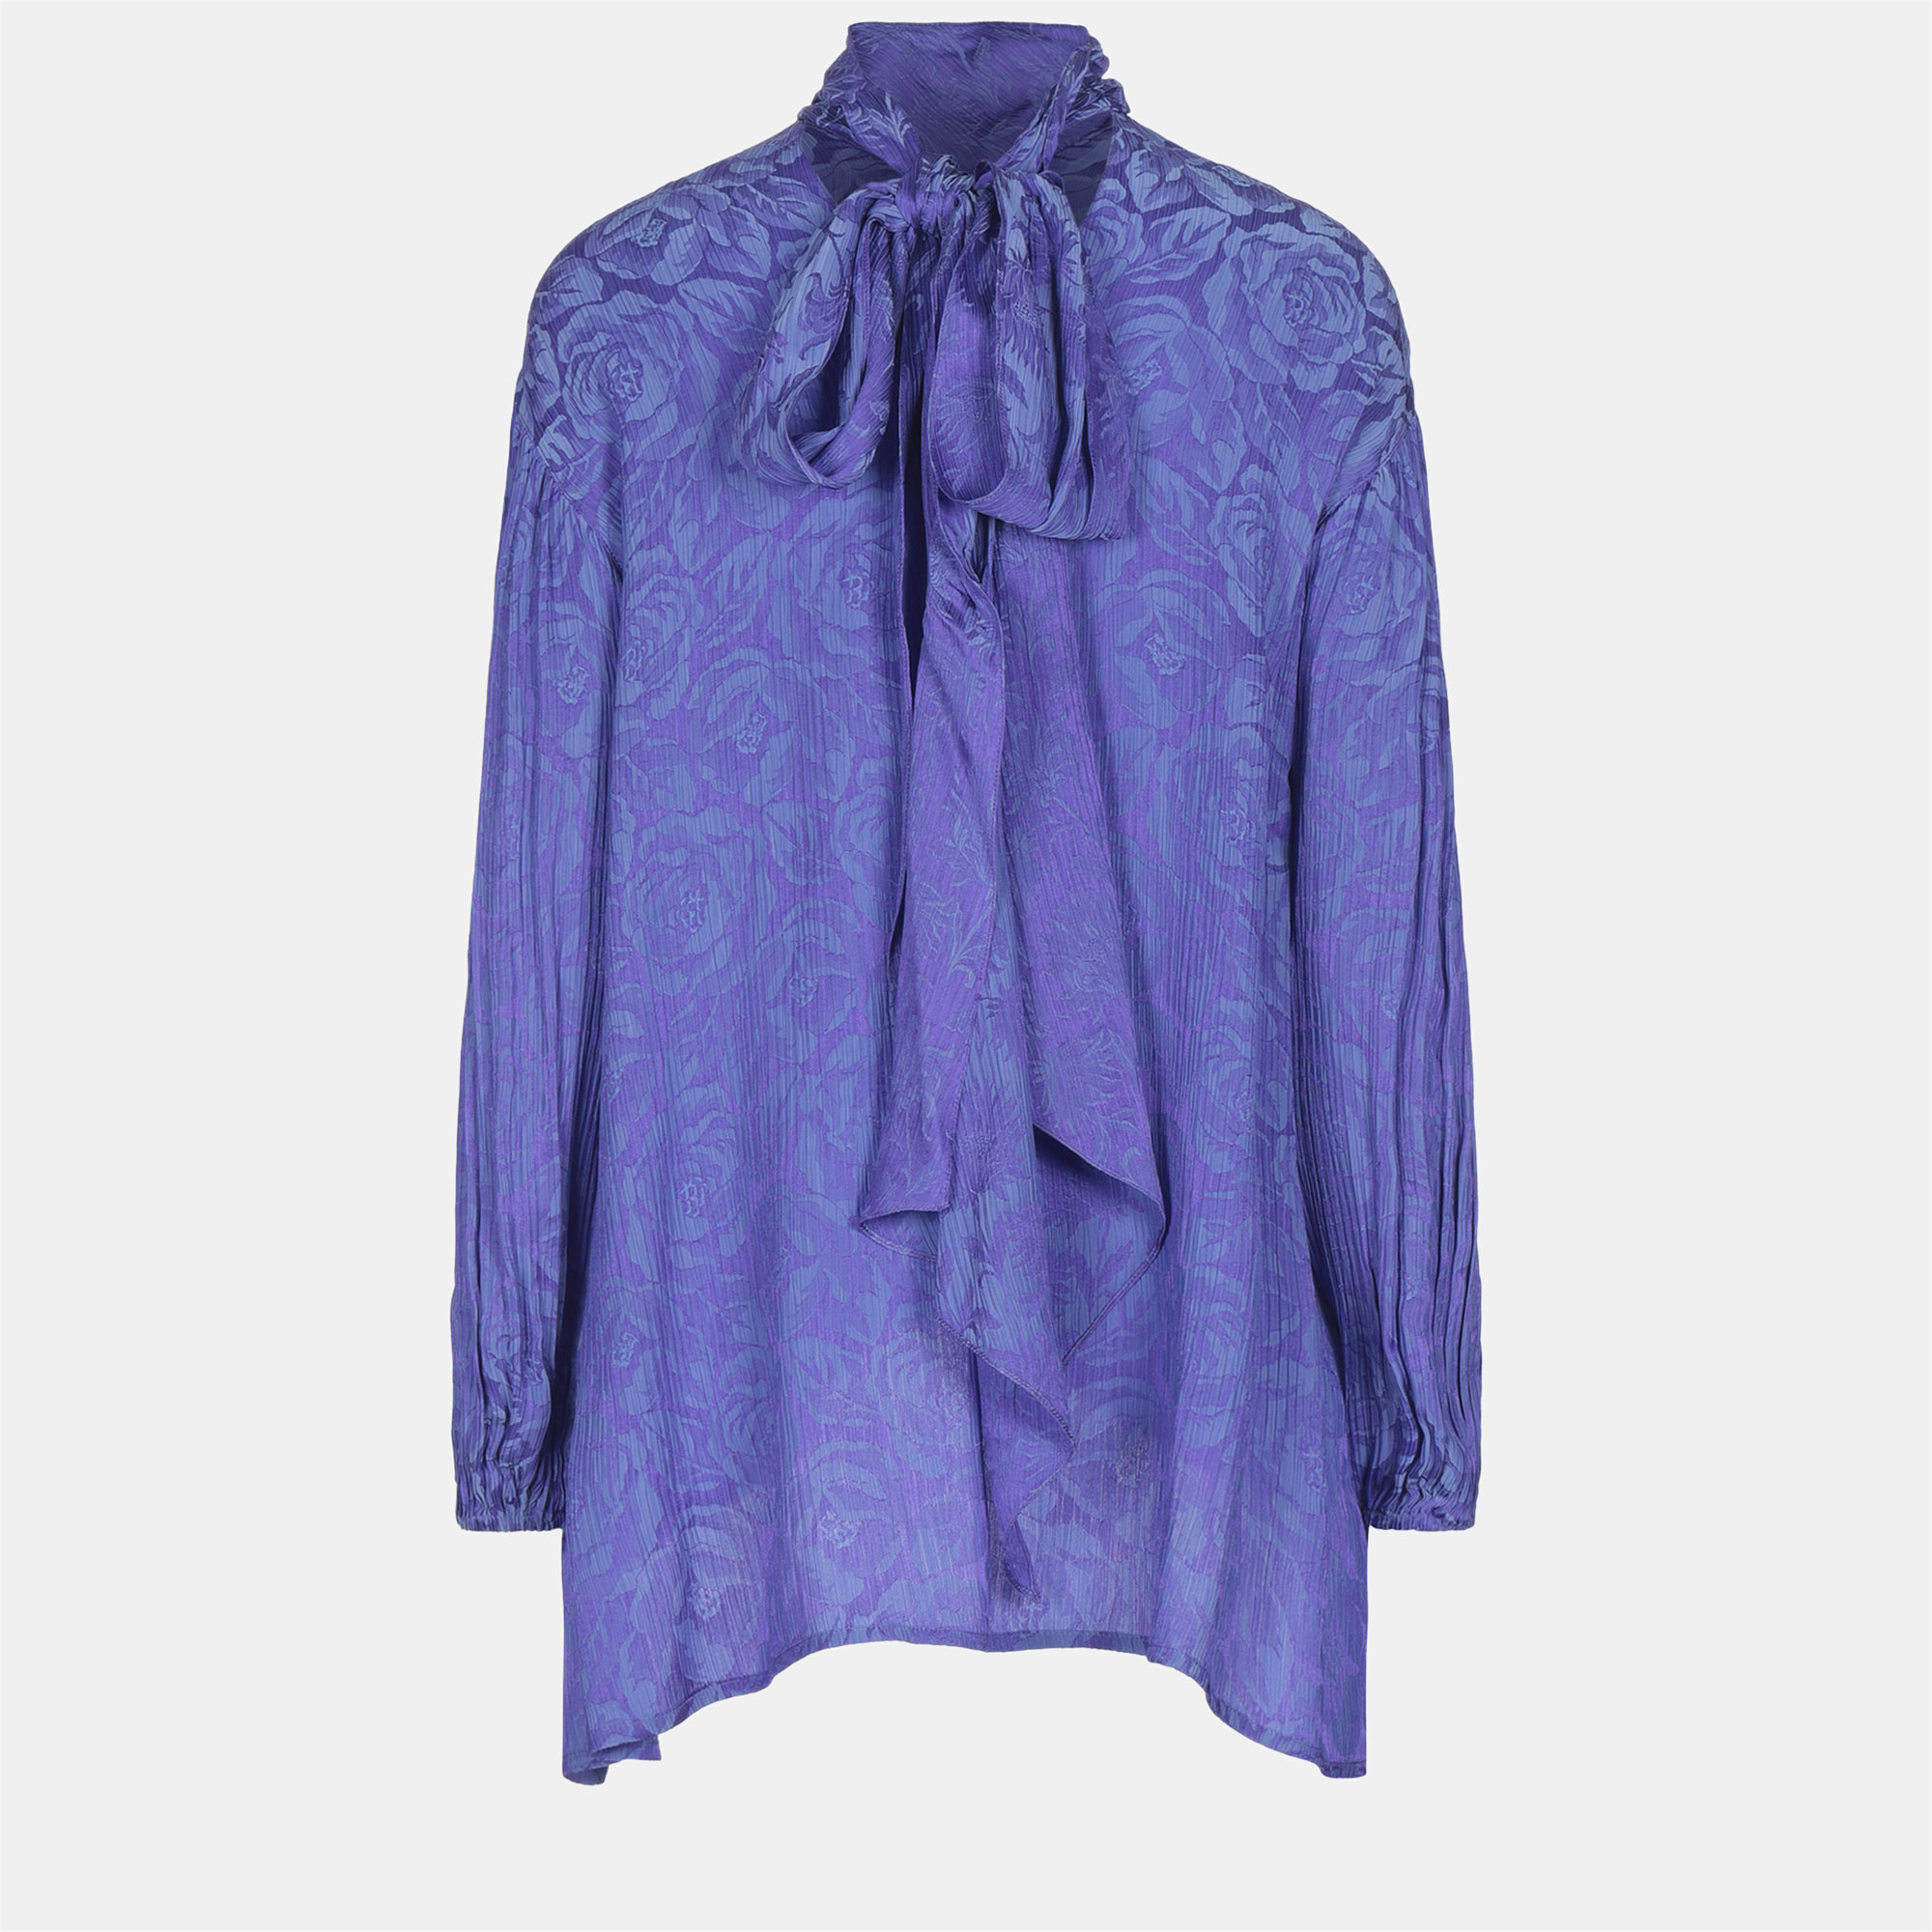 Chloe bluish violet floral jacquard silk blouse m (fr 38)